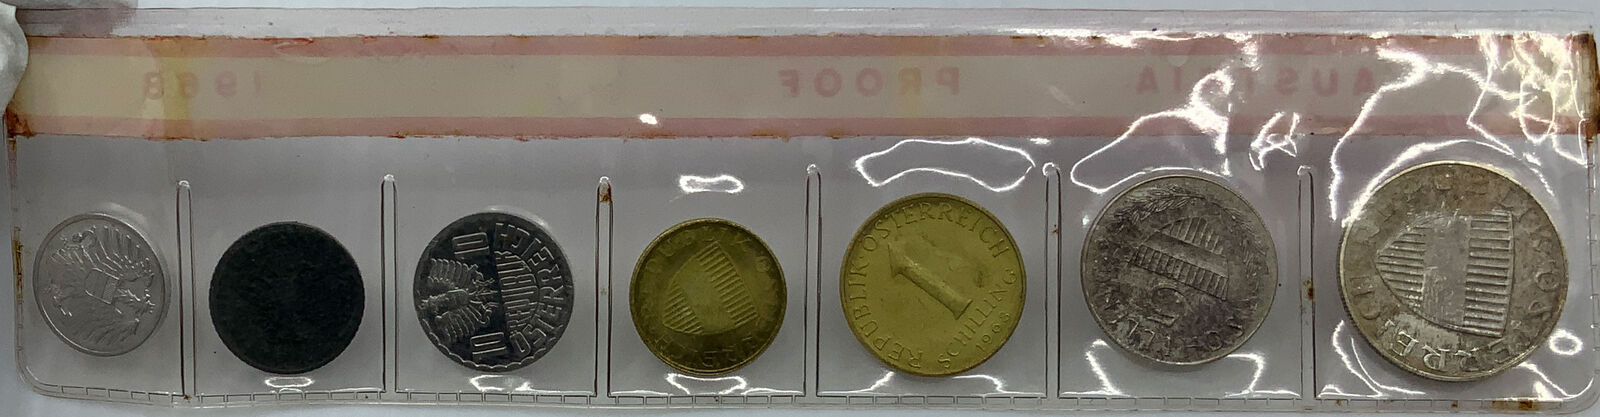 1968 Austria Wachau Woman 10 Schilling Proof Set of 7 Coins 1 is Silver i114724